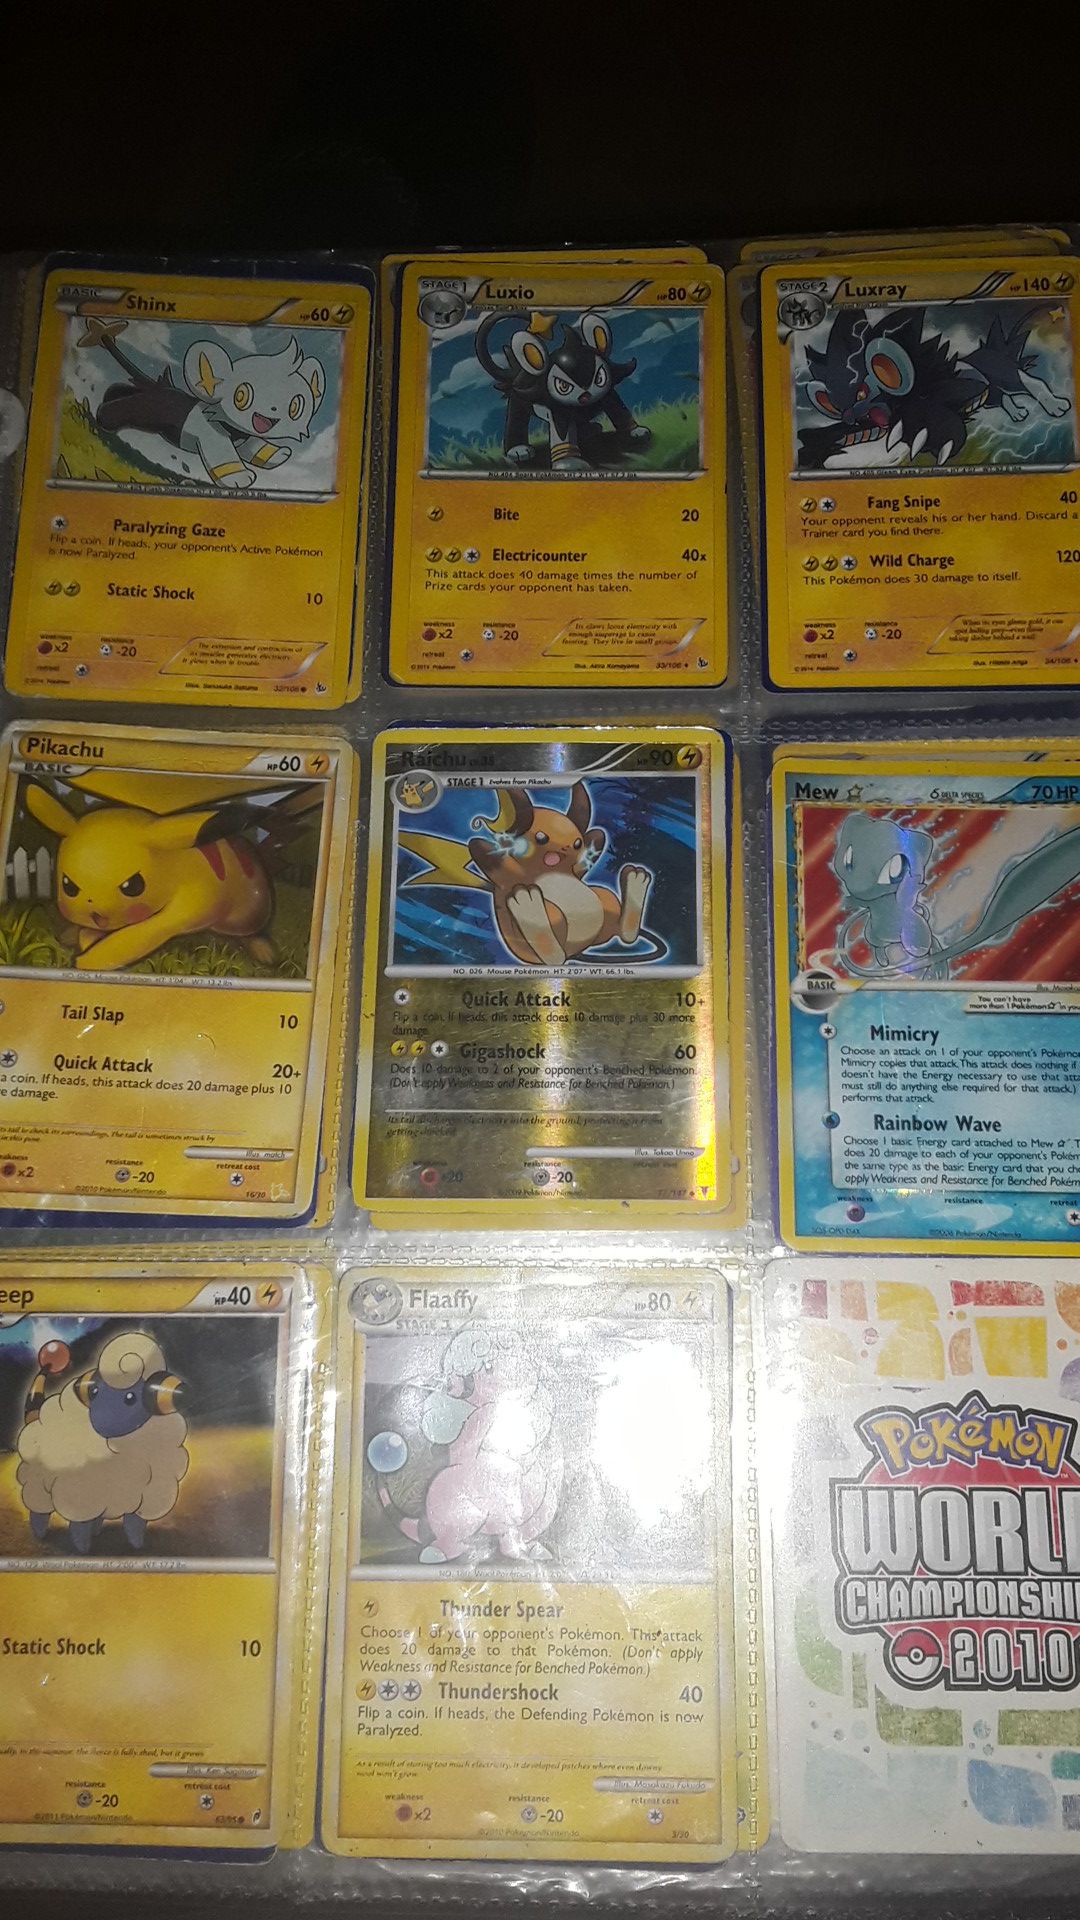 200+ Pokemon cards slide1 Mew sold